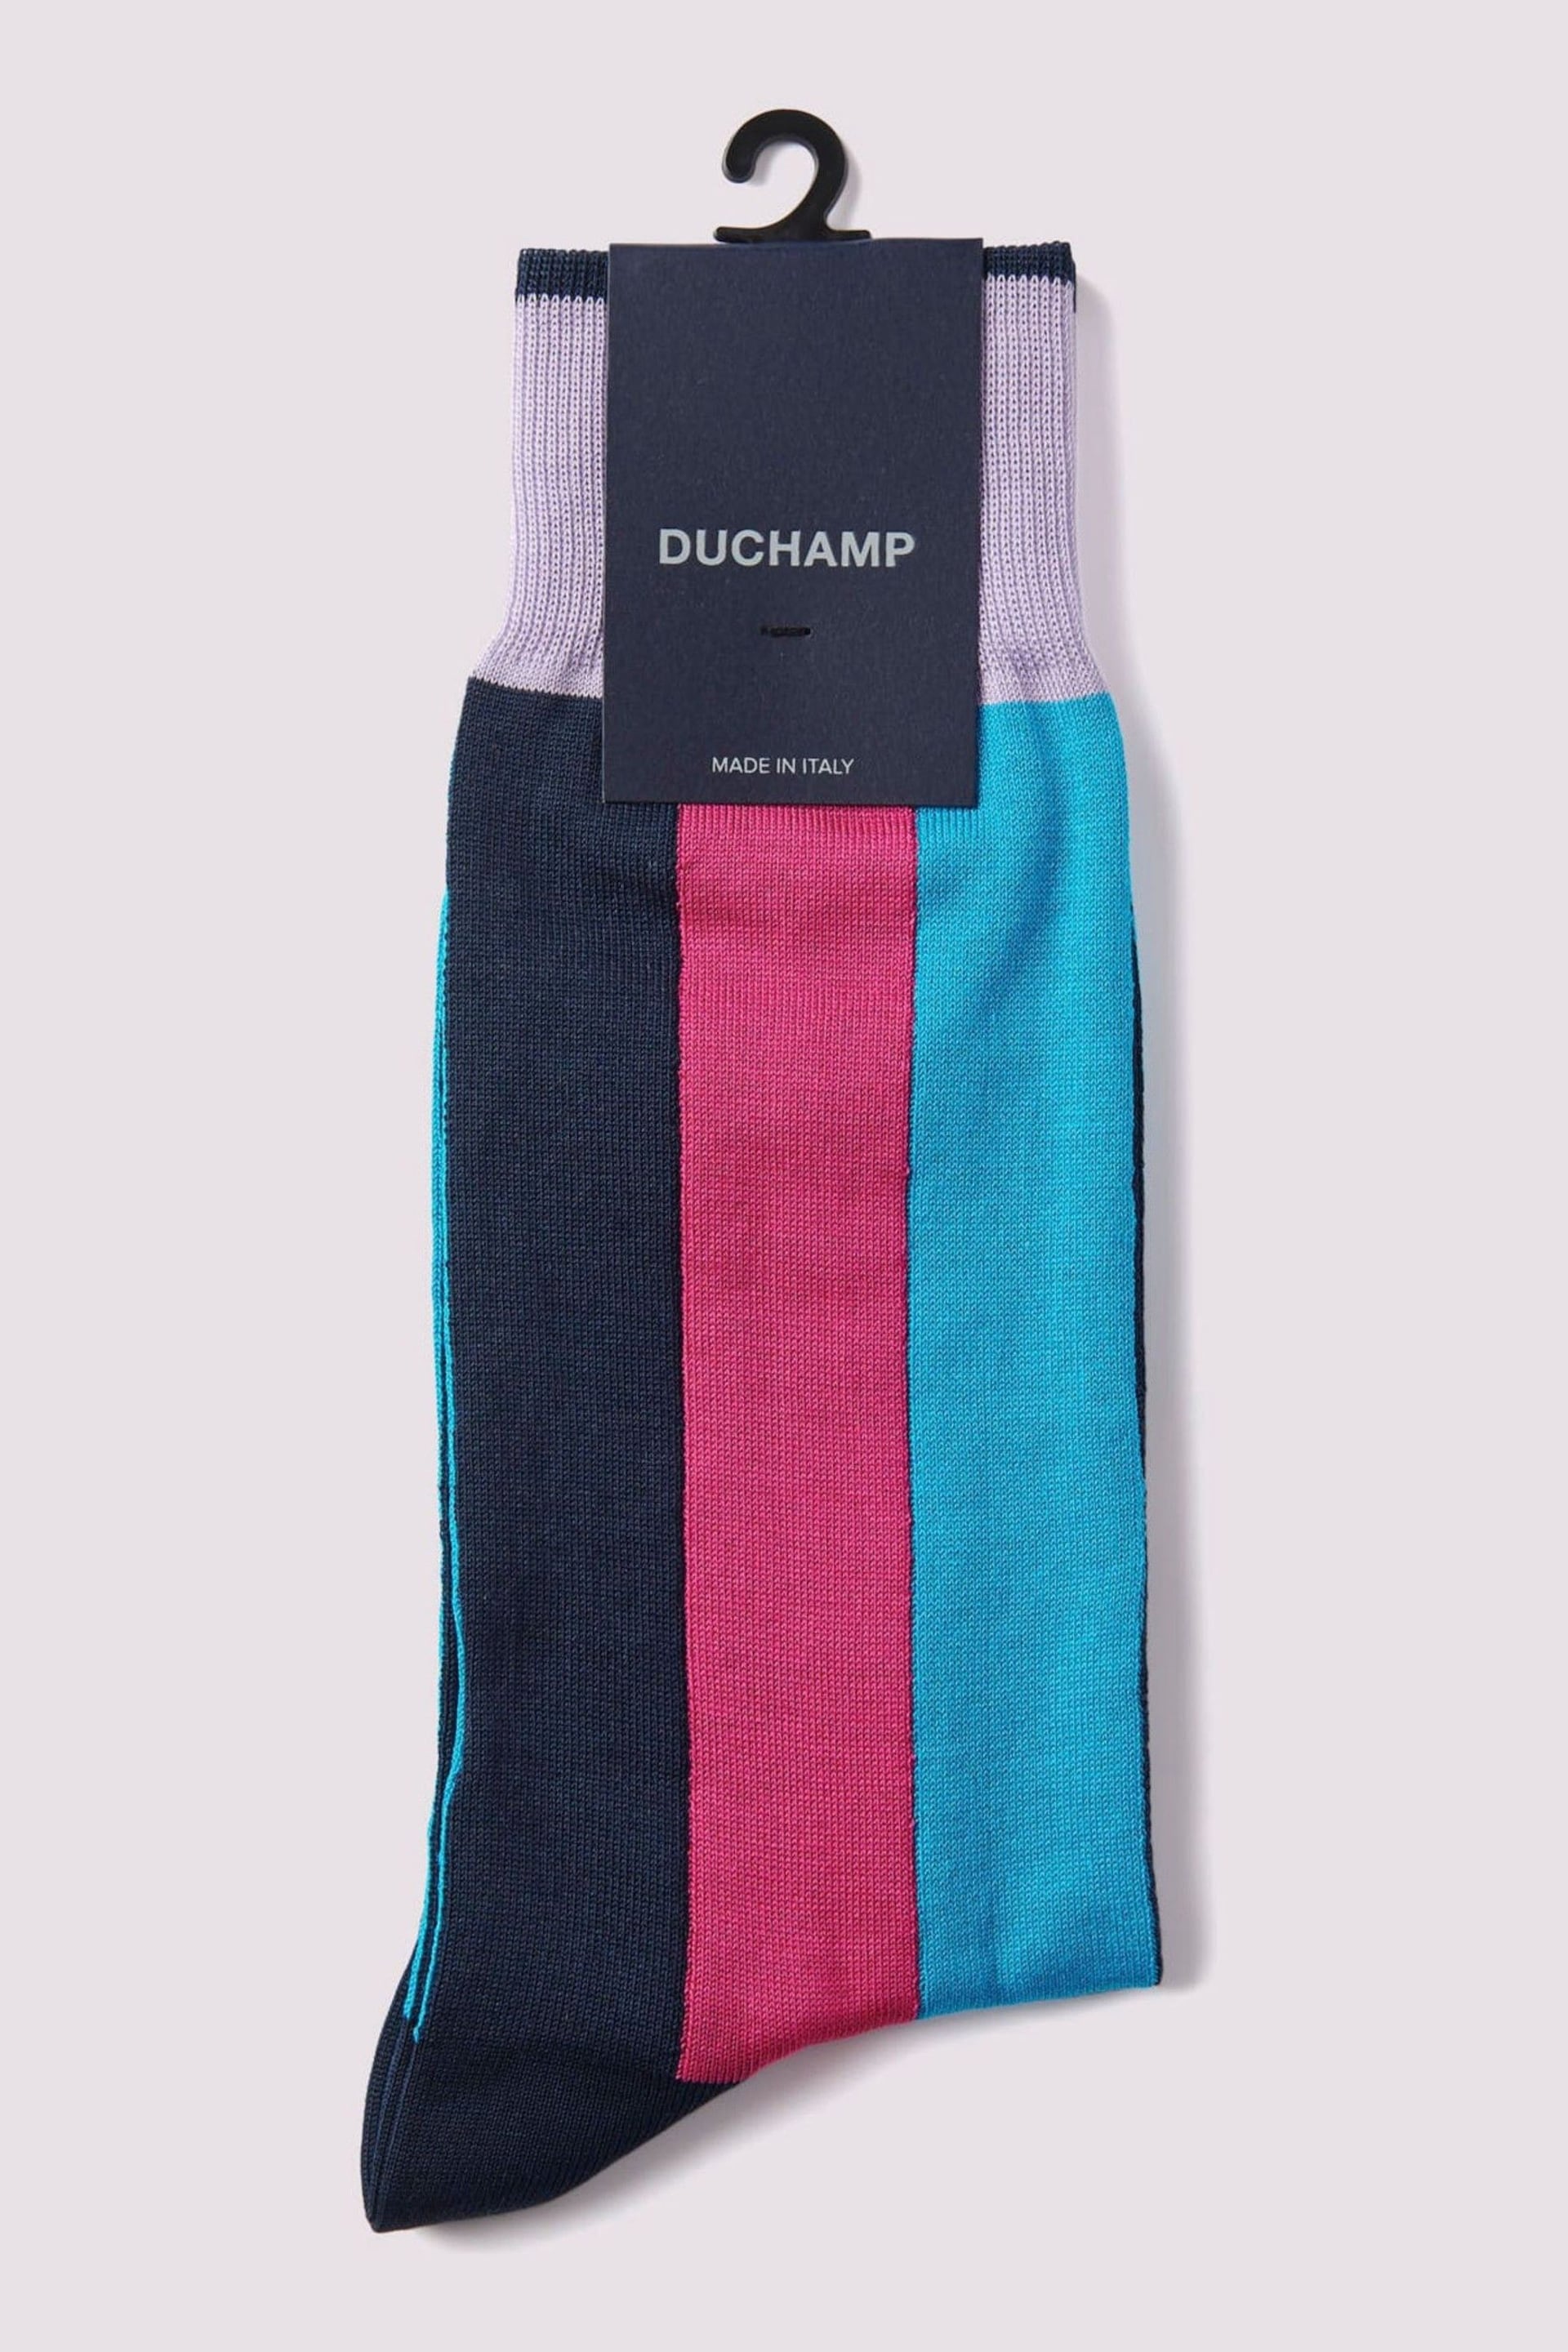 Duchamp Pink Wide Vertical Stripe Socks - Image 1 of 3